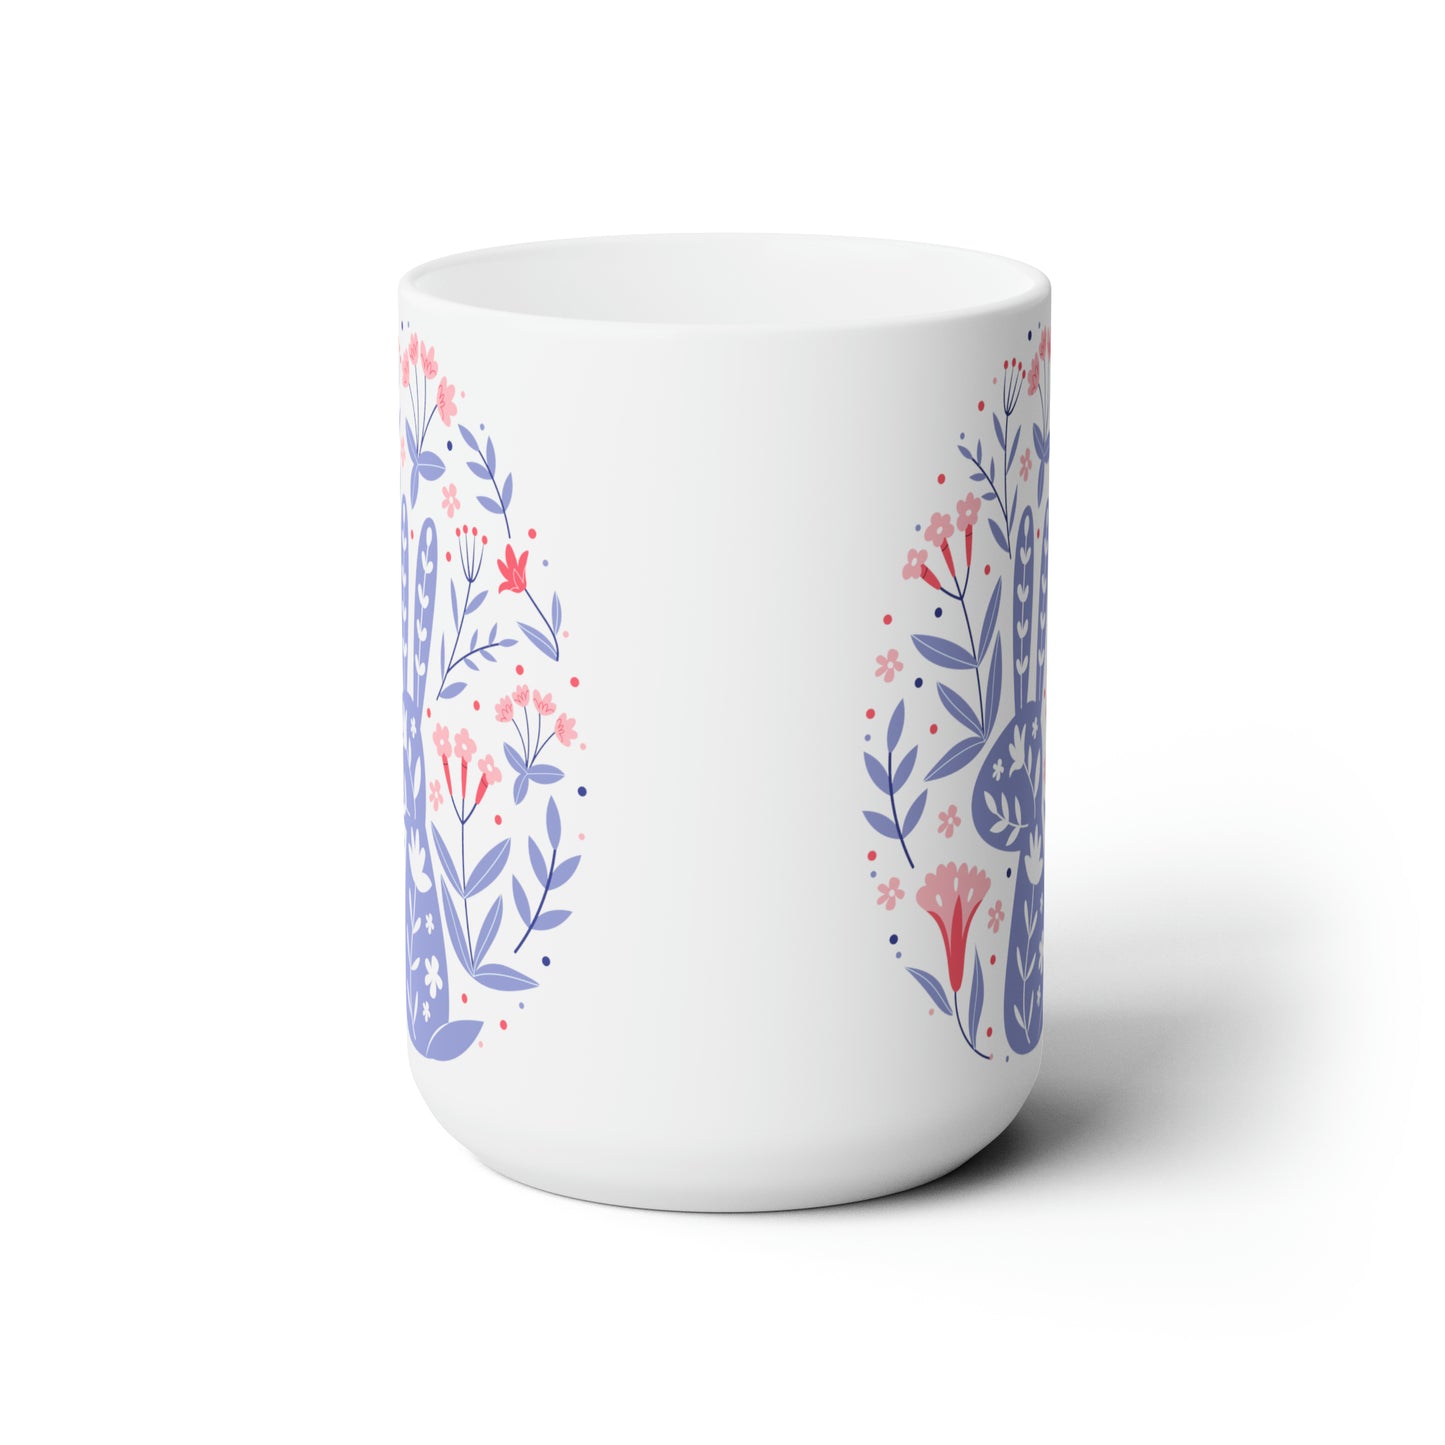 Easter Coffee Mug For Flowers Tea Cup For Bunny Mug Gift Idea